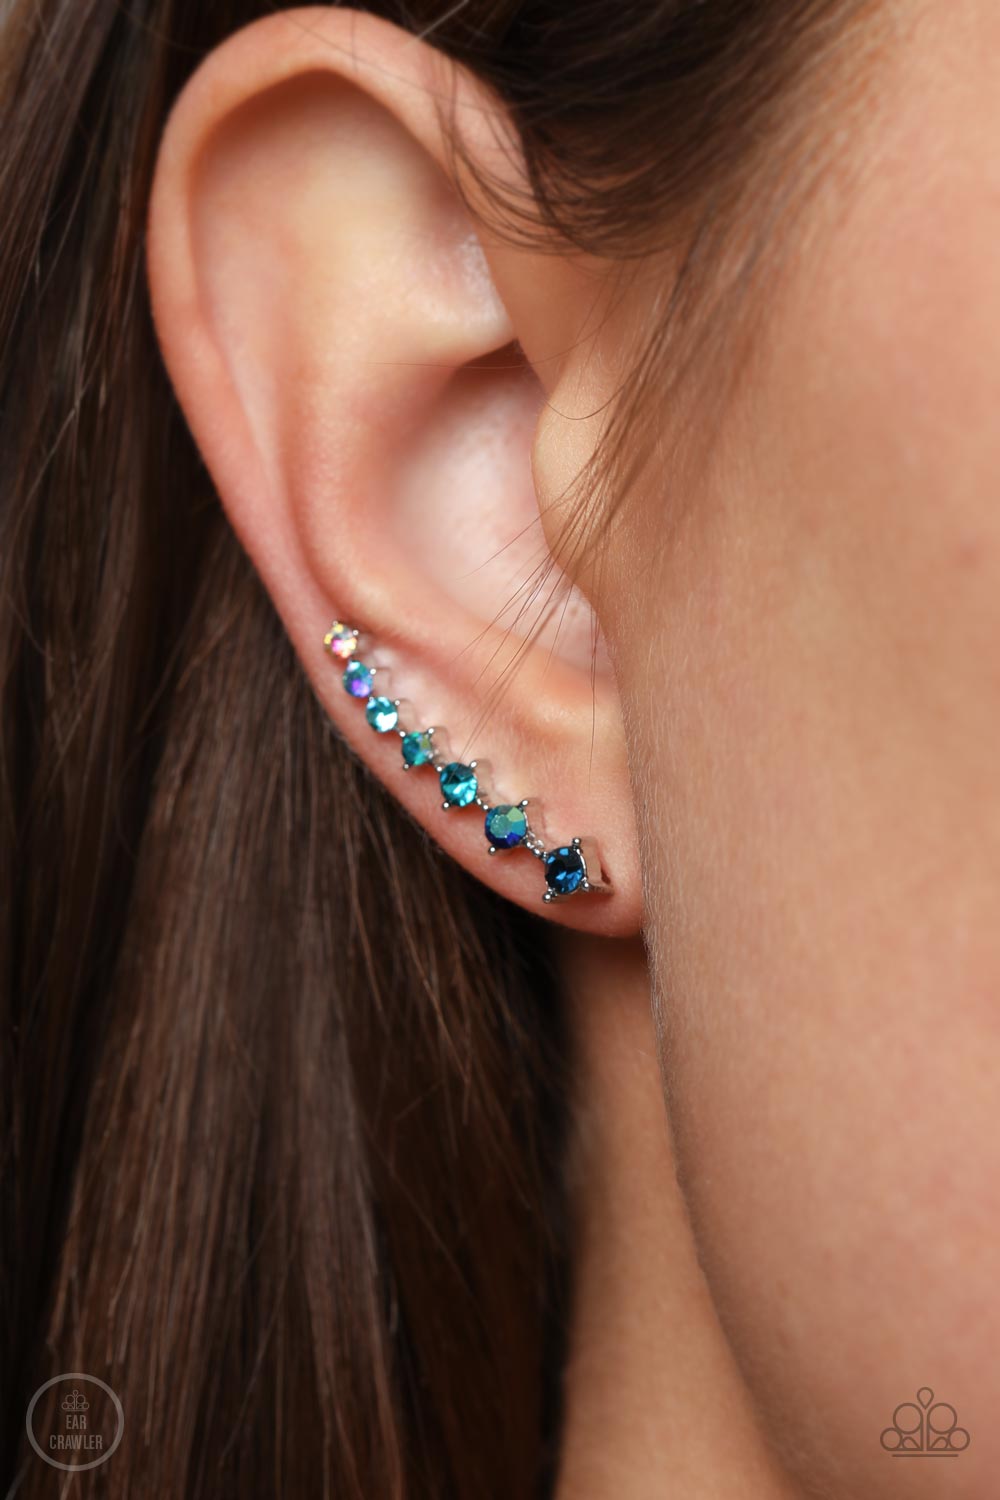 STARLIGHT Show Blue Rhinestone Ear Crawler Earrings - Paparazzi Accessories-on model - CarasShop.com - $5 Jewelry by Cara Jewels